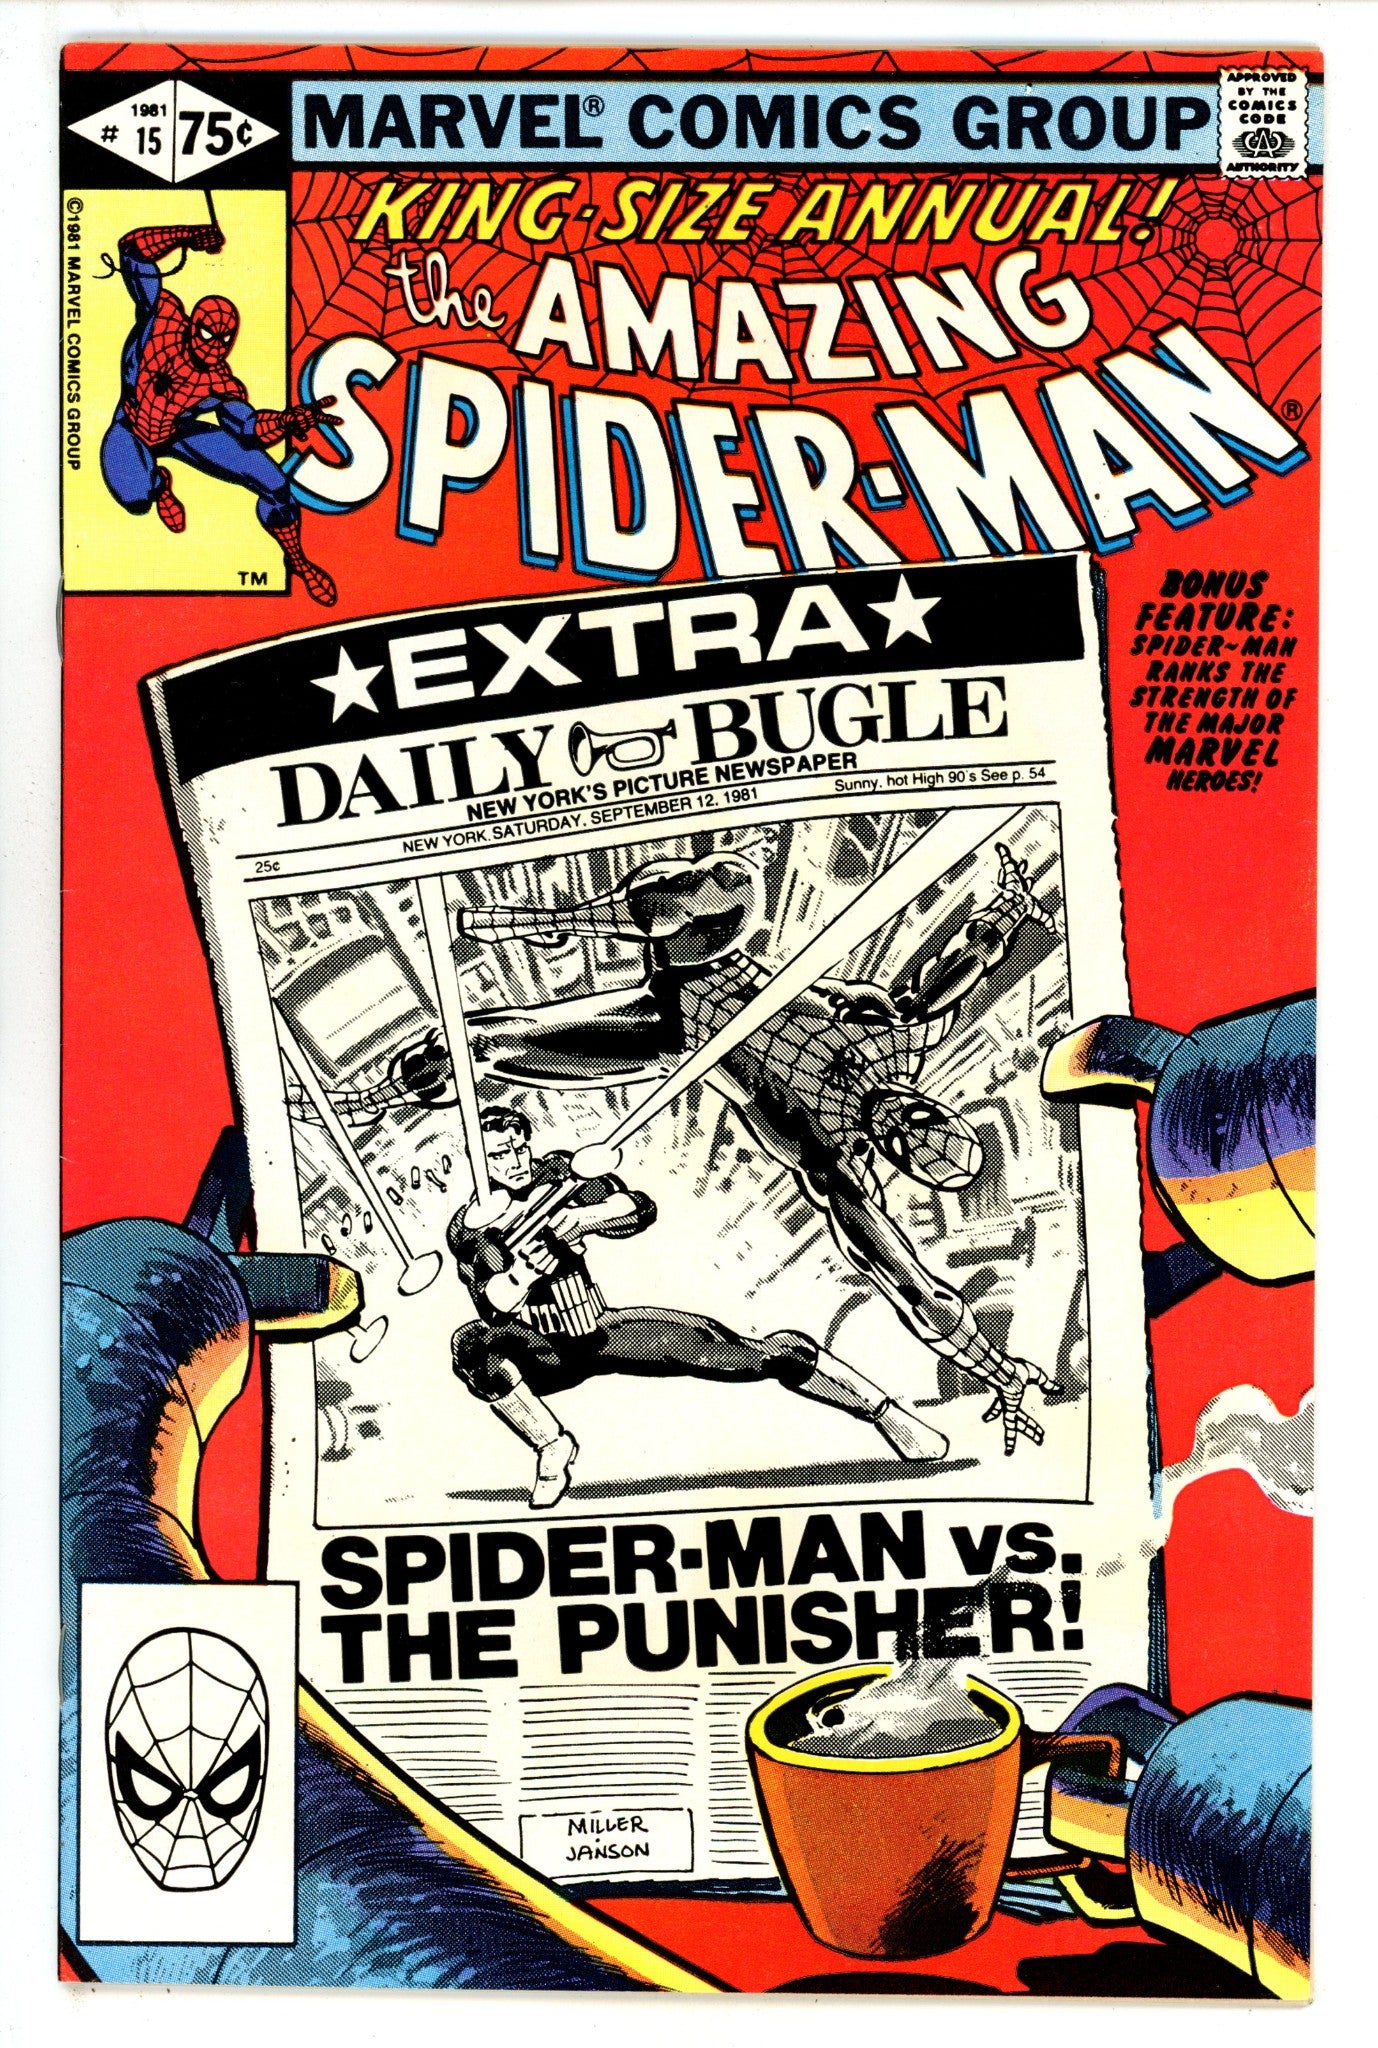 The Amazing Spider-Man Annual Vol 1 15 VF (8.0) (1981) 